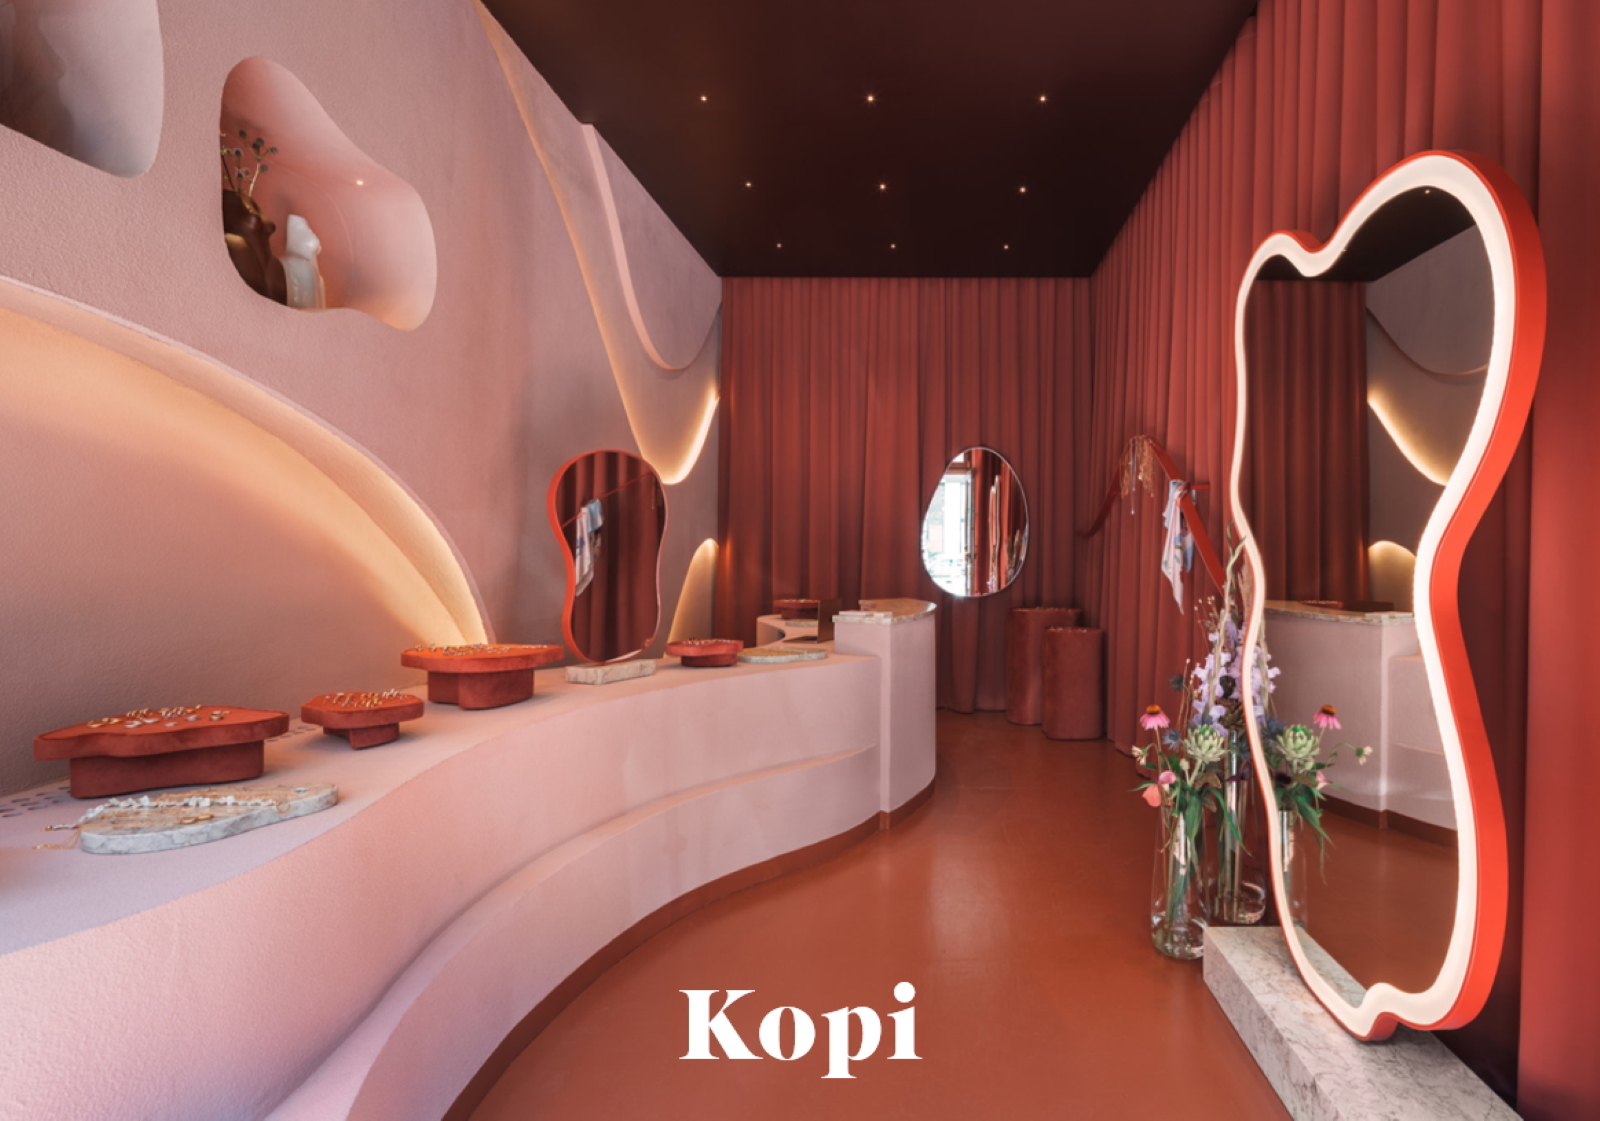 Kopi retail design tour missions mmm 0